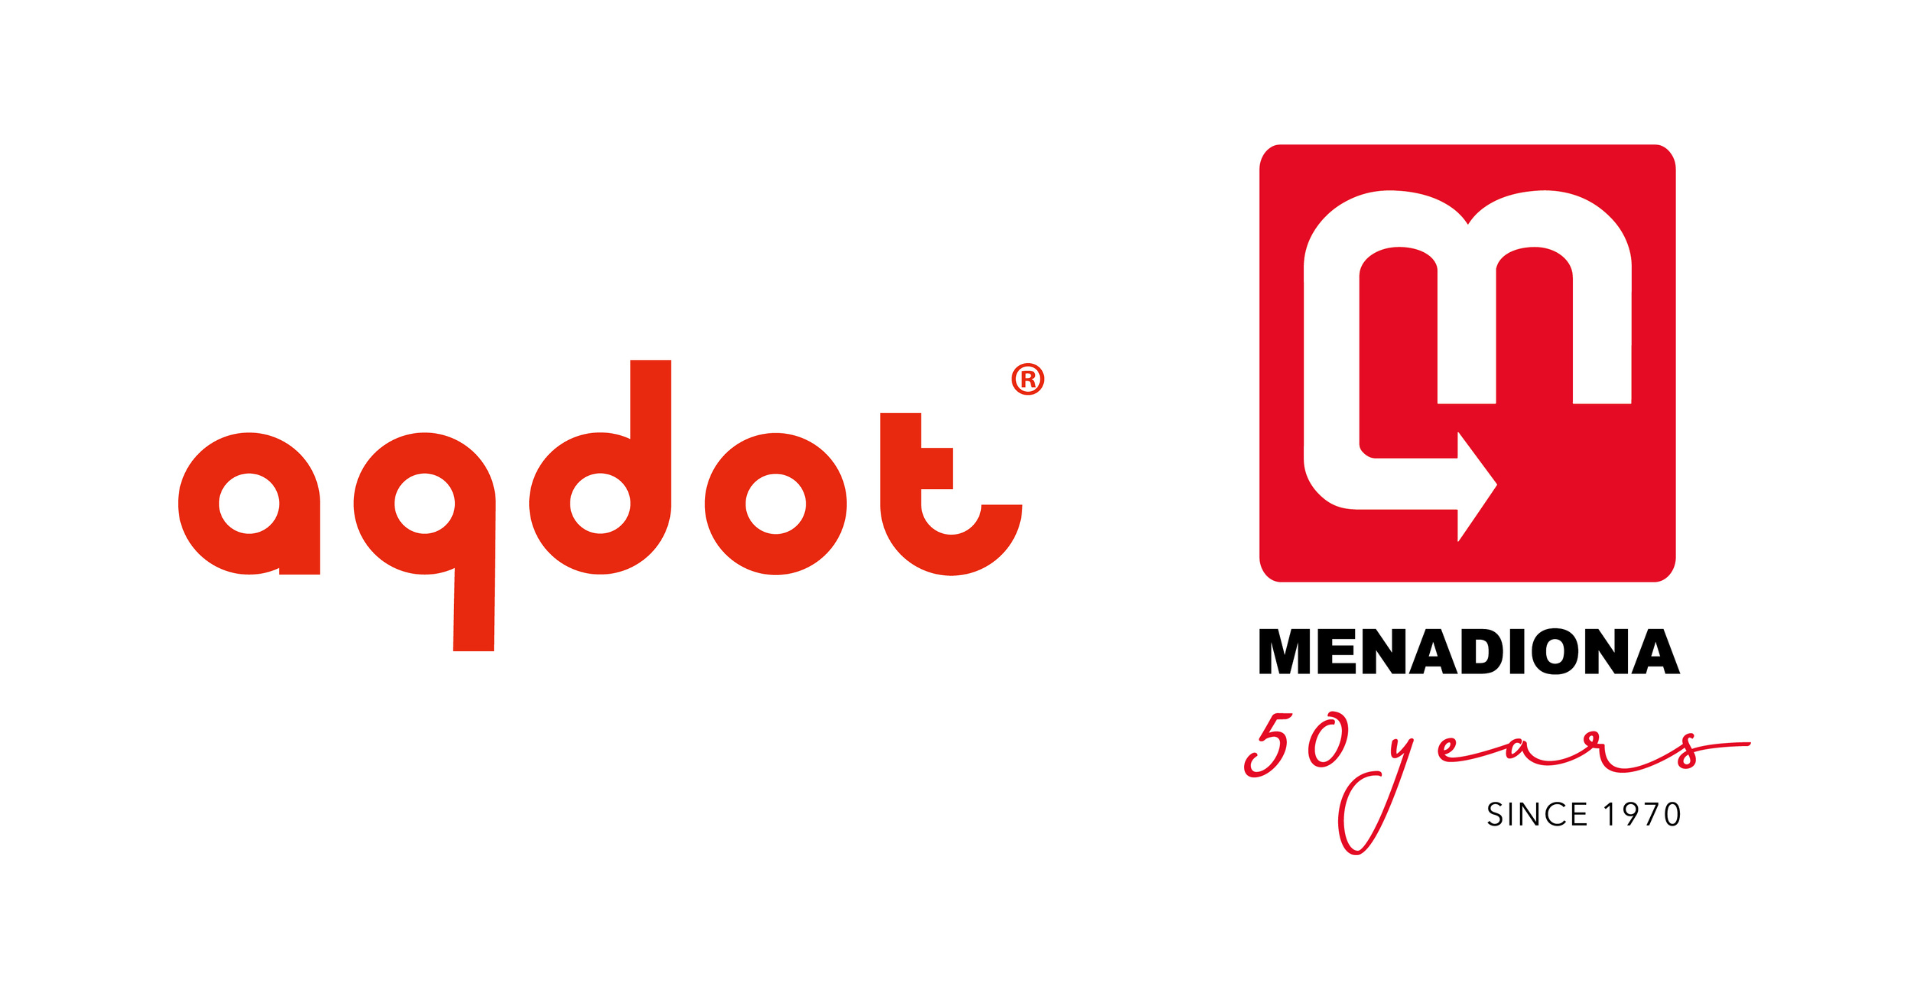 Aqdot & Menadiona announce a strategic partnership